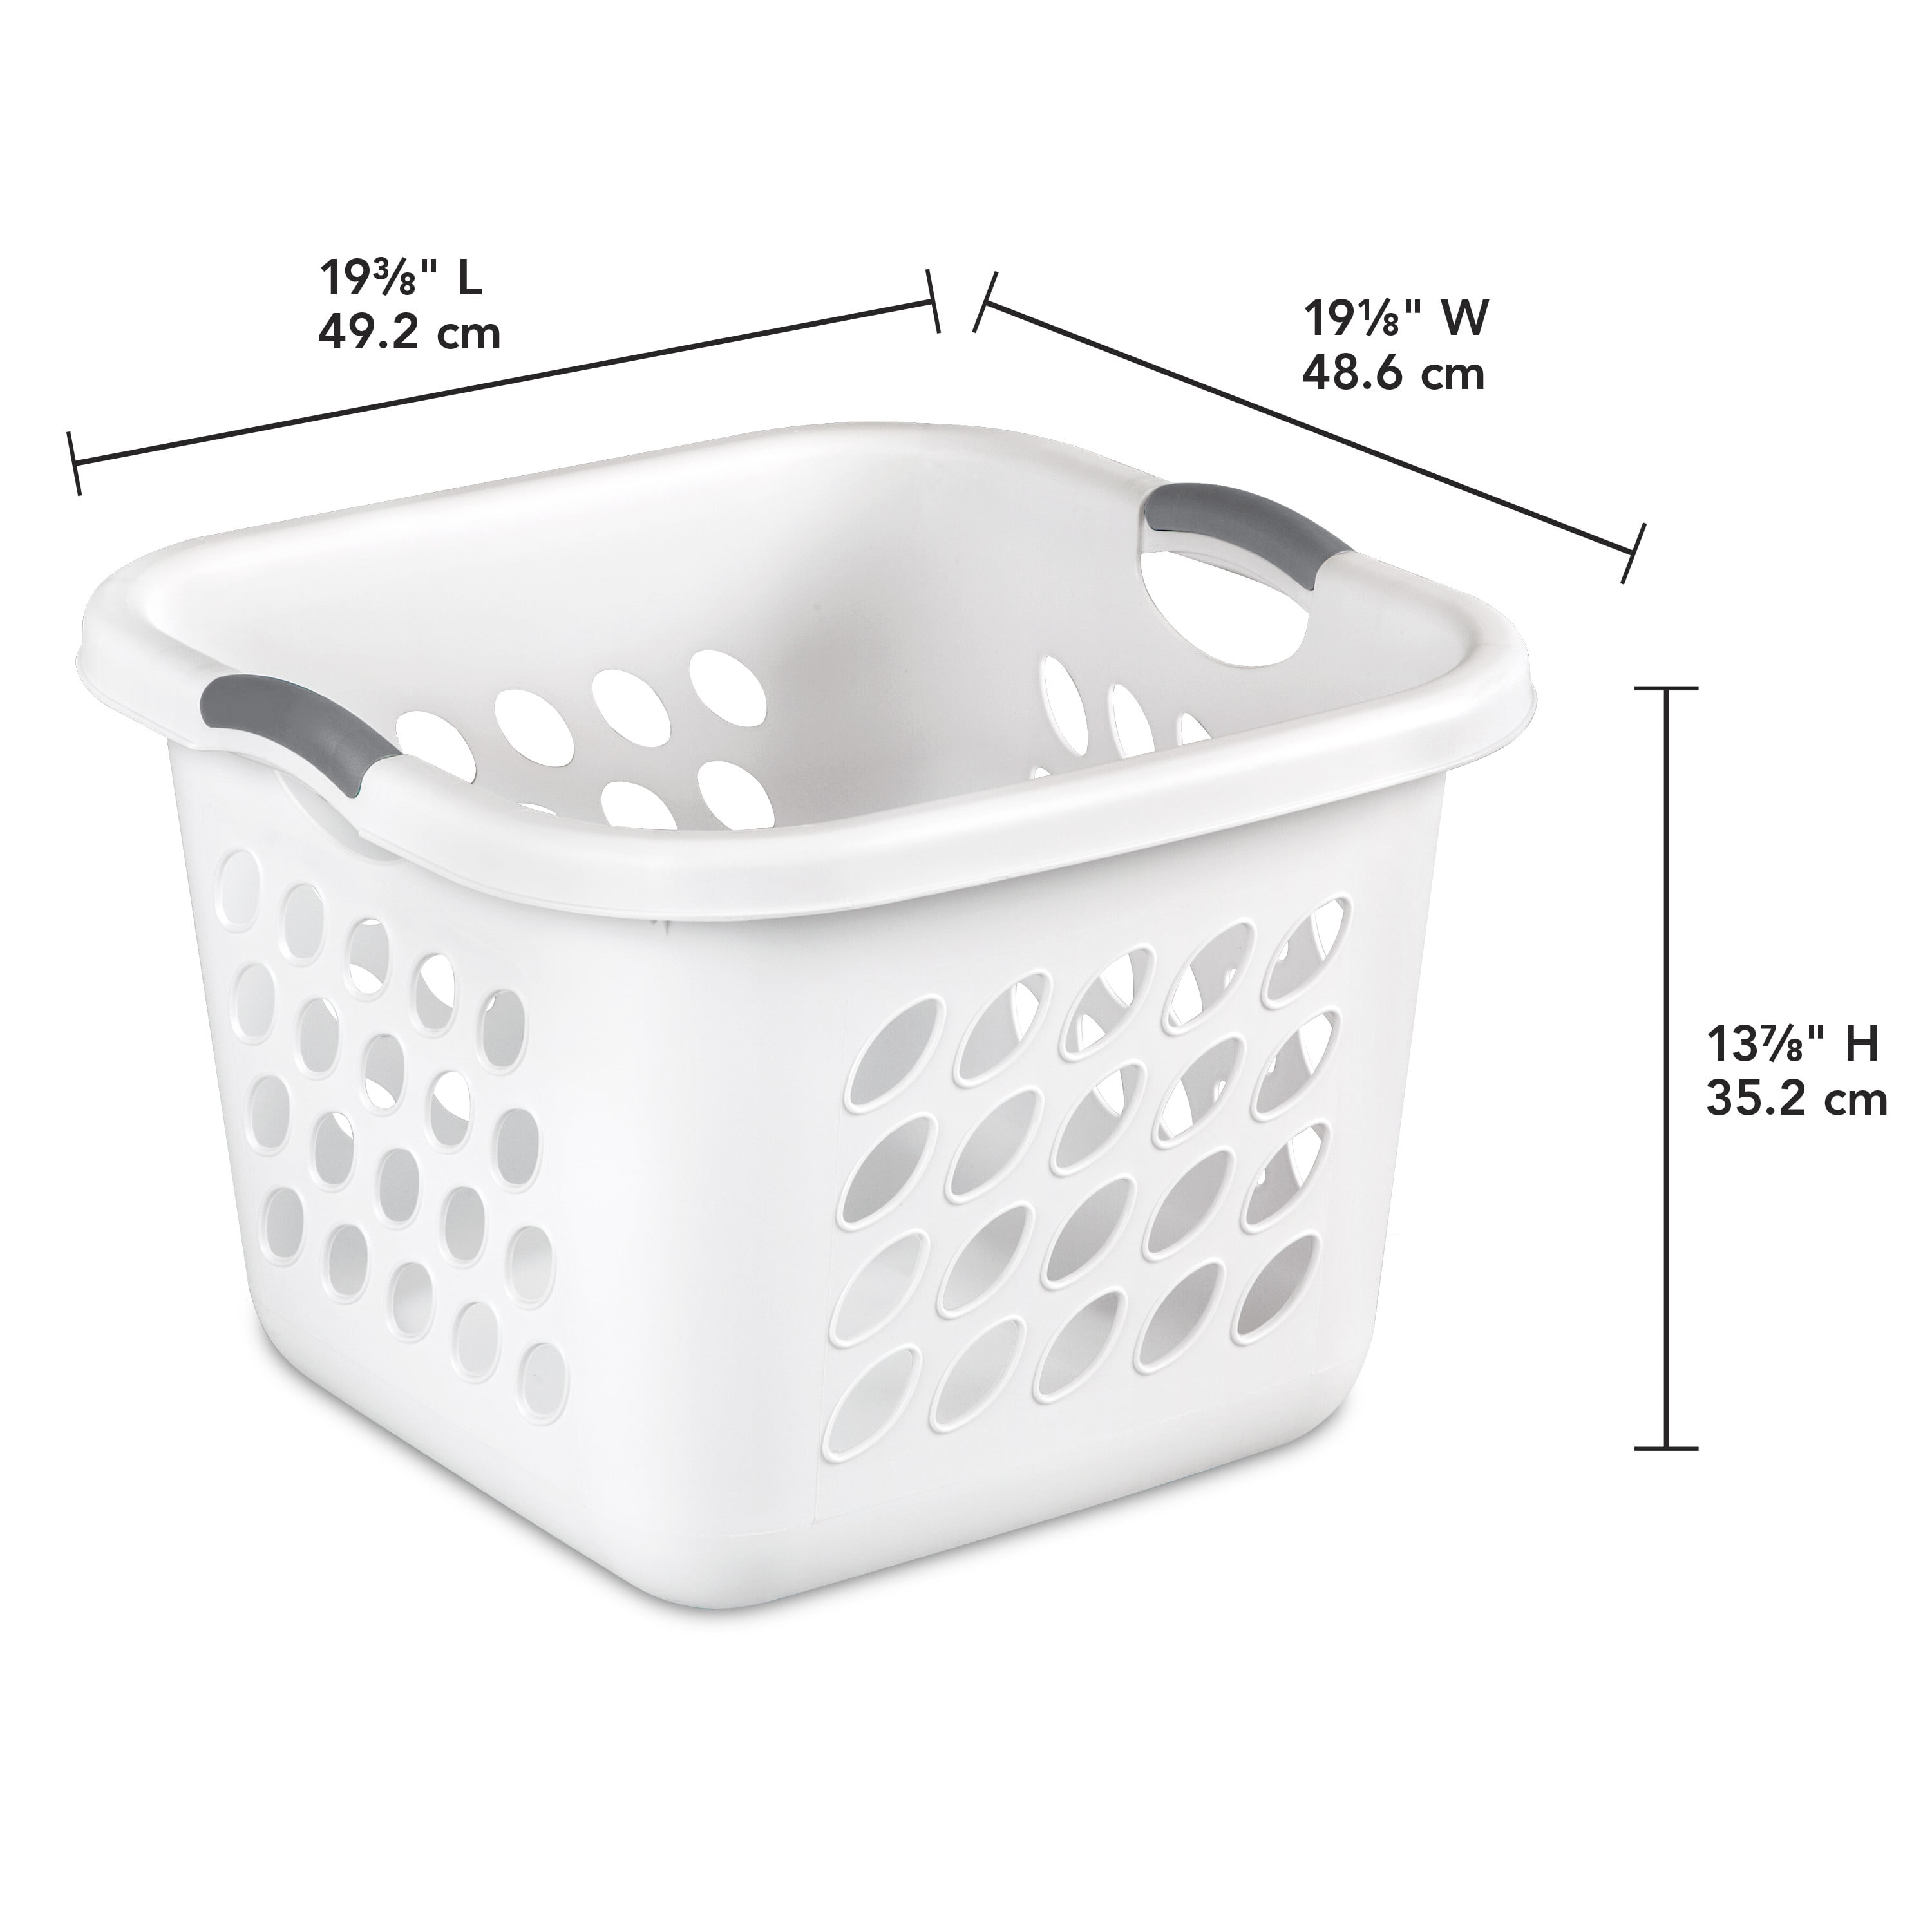 Buy > big w laundry basket > in stock